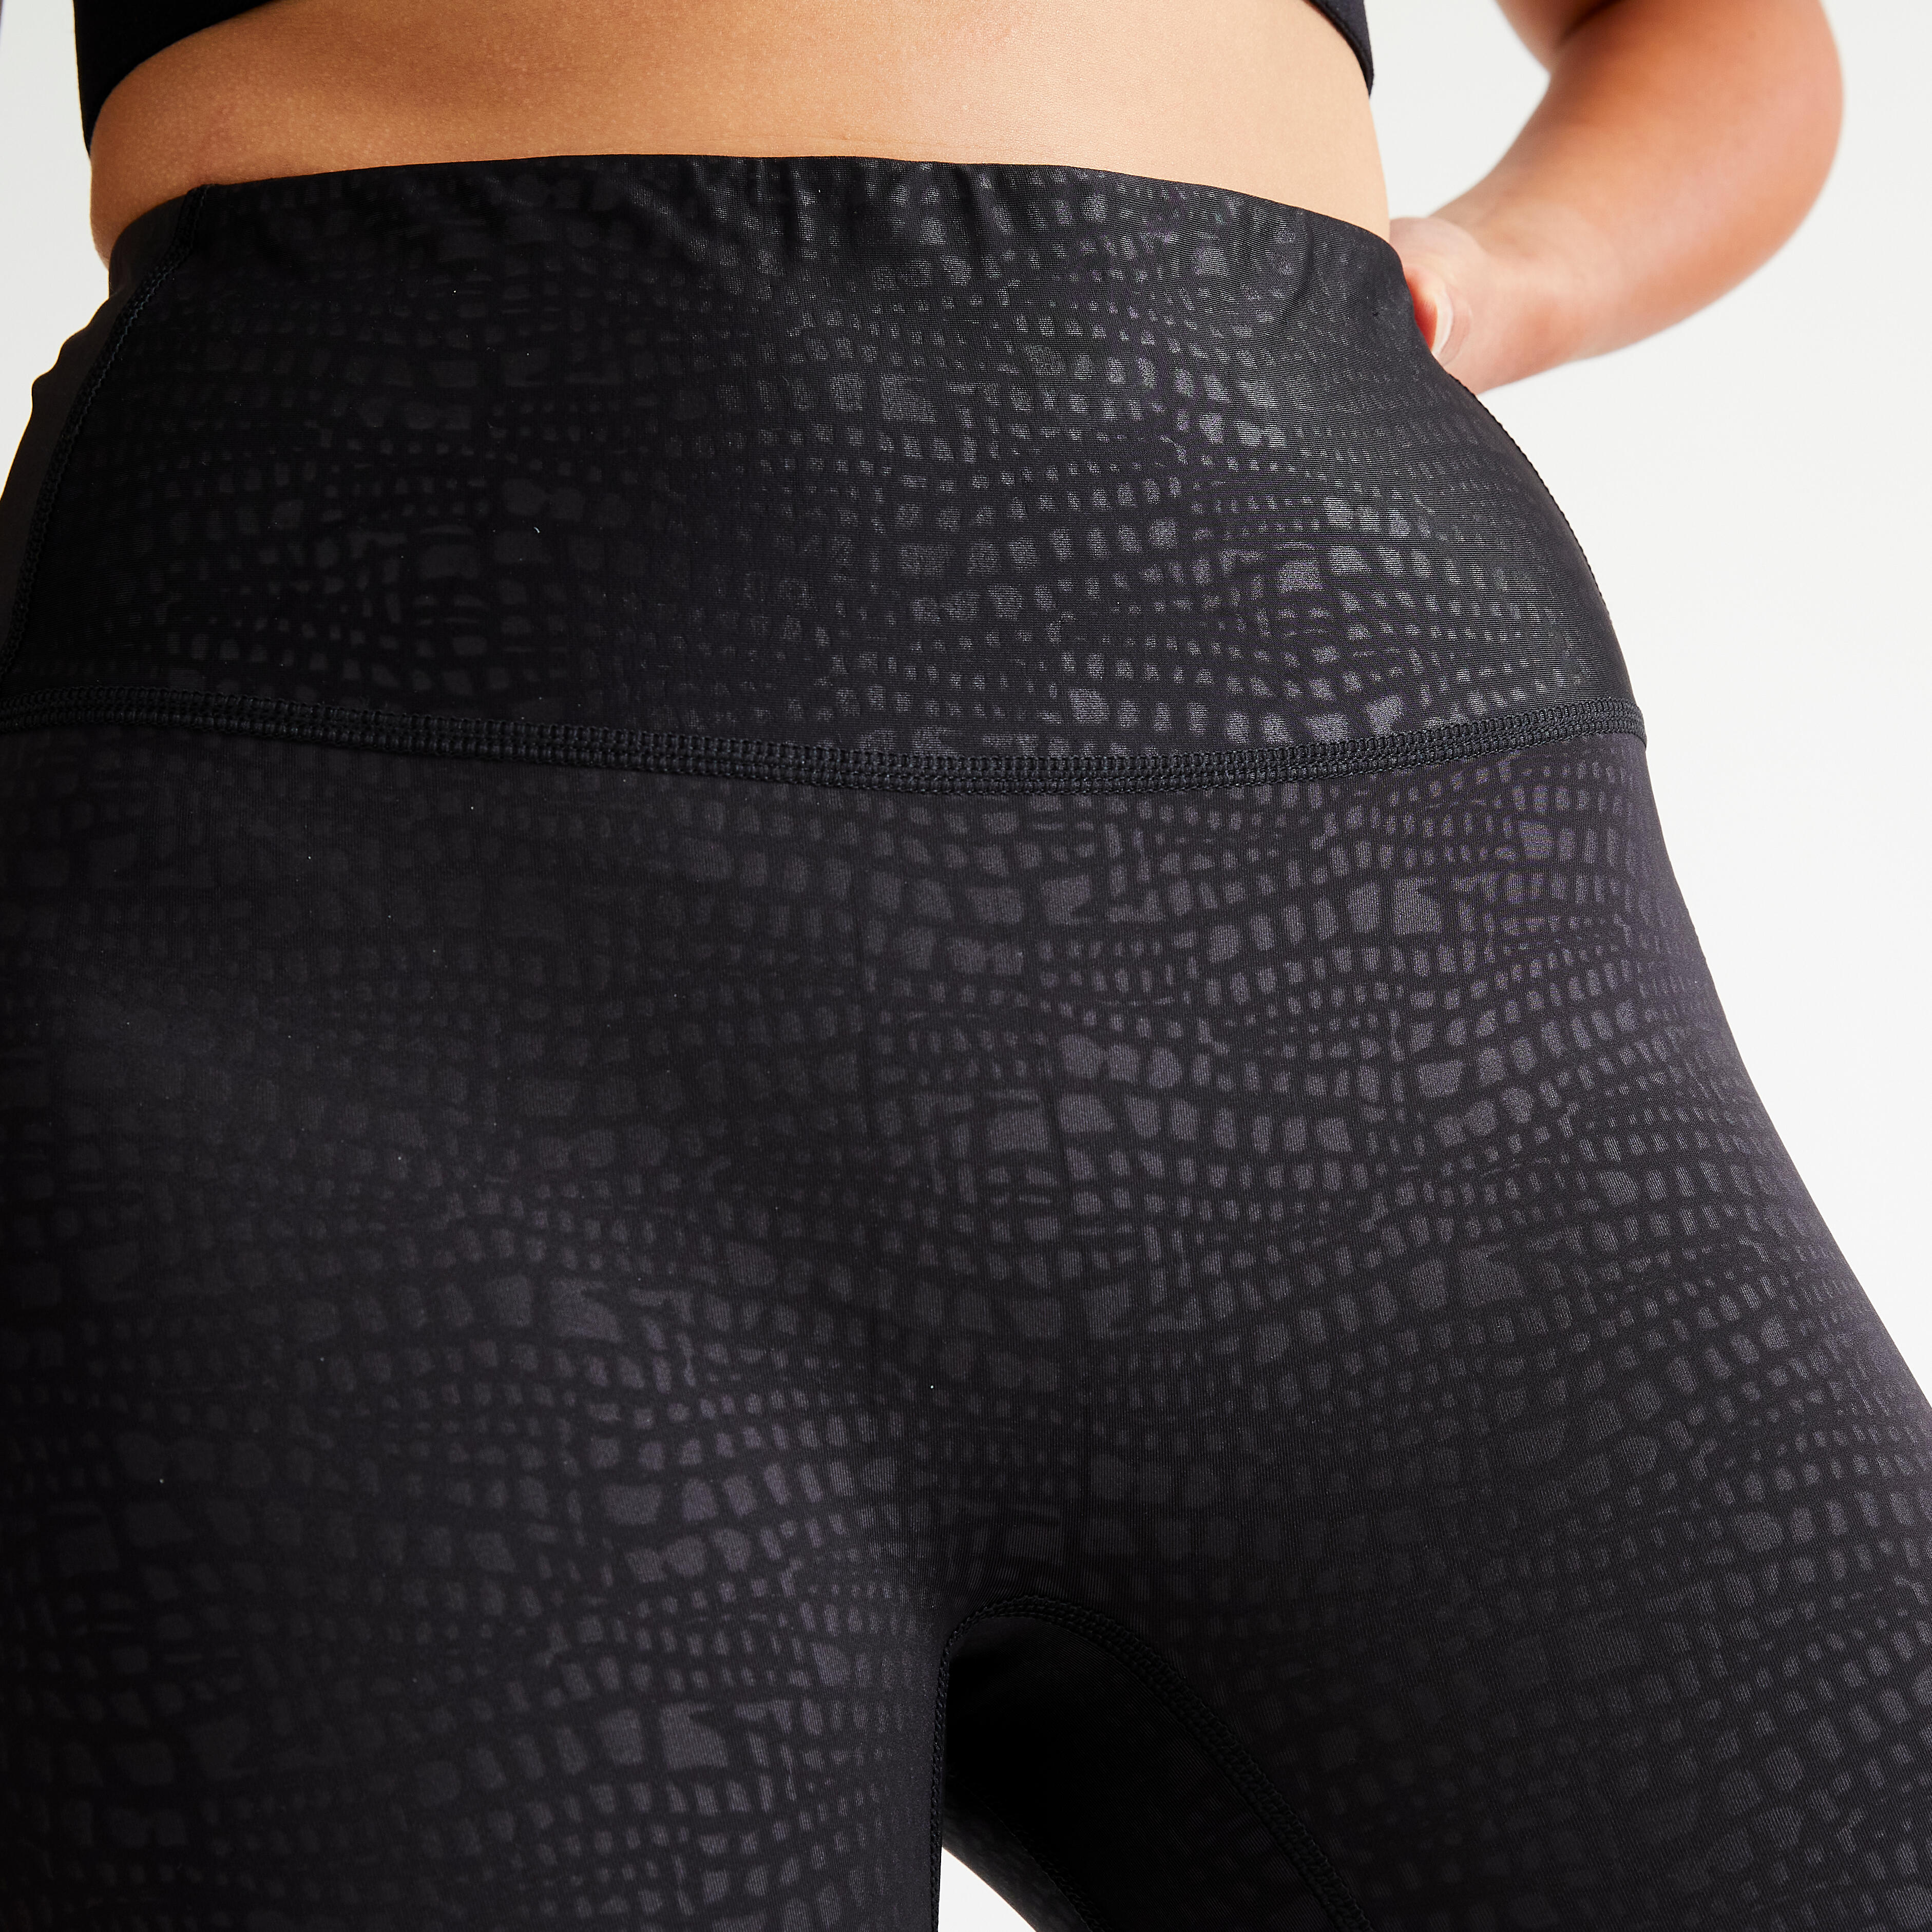 Black shaping leggings with a decorative waist | Glara.eu ❤️